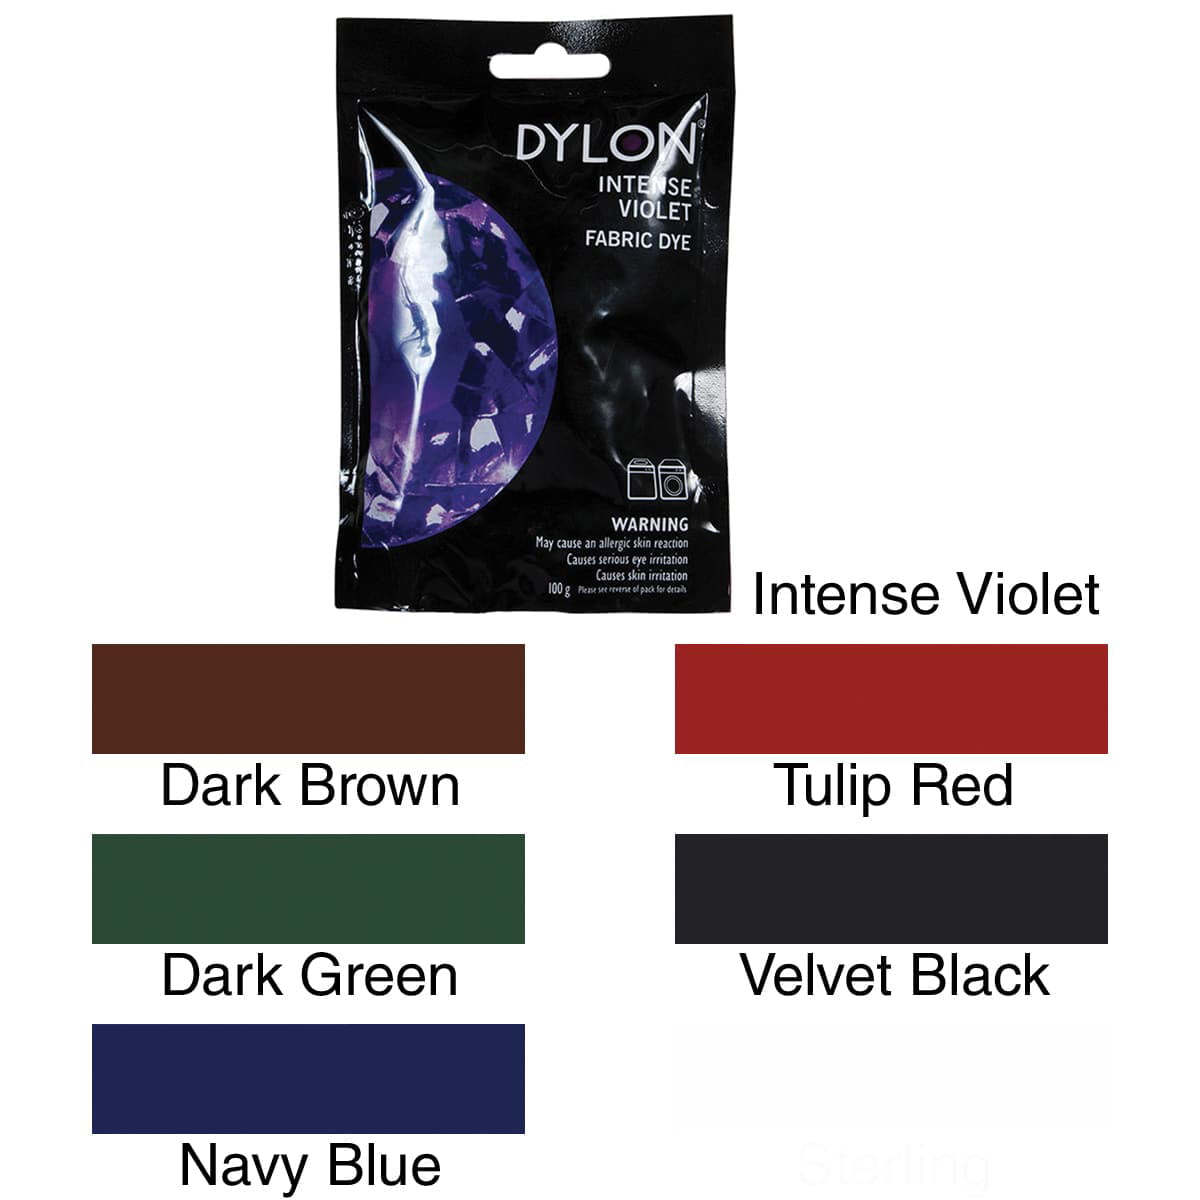 Dylon Natural Fabric Dye - wotever inc.